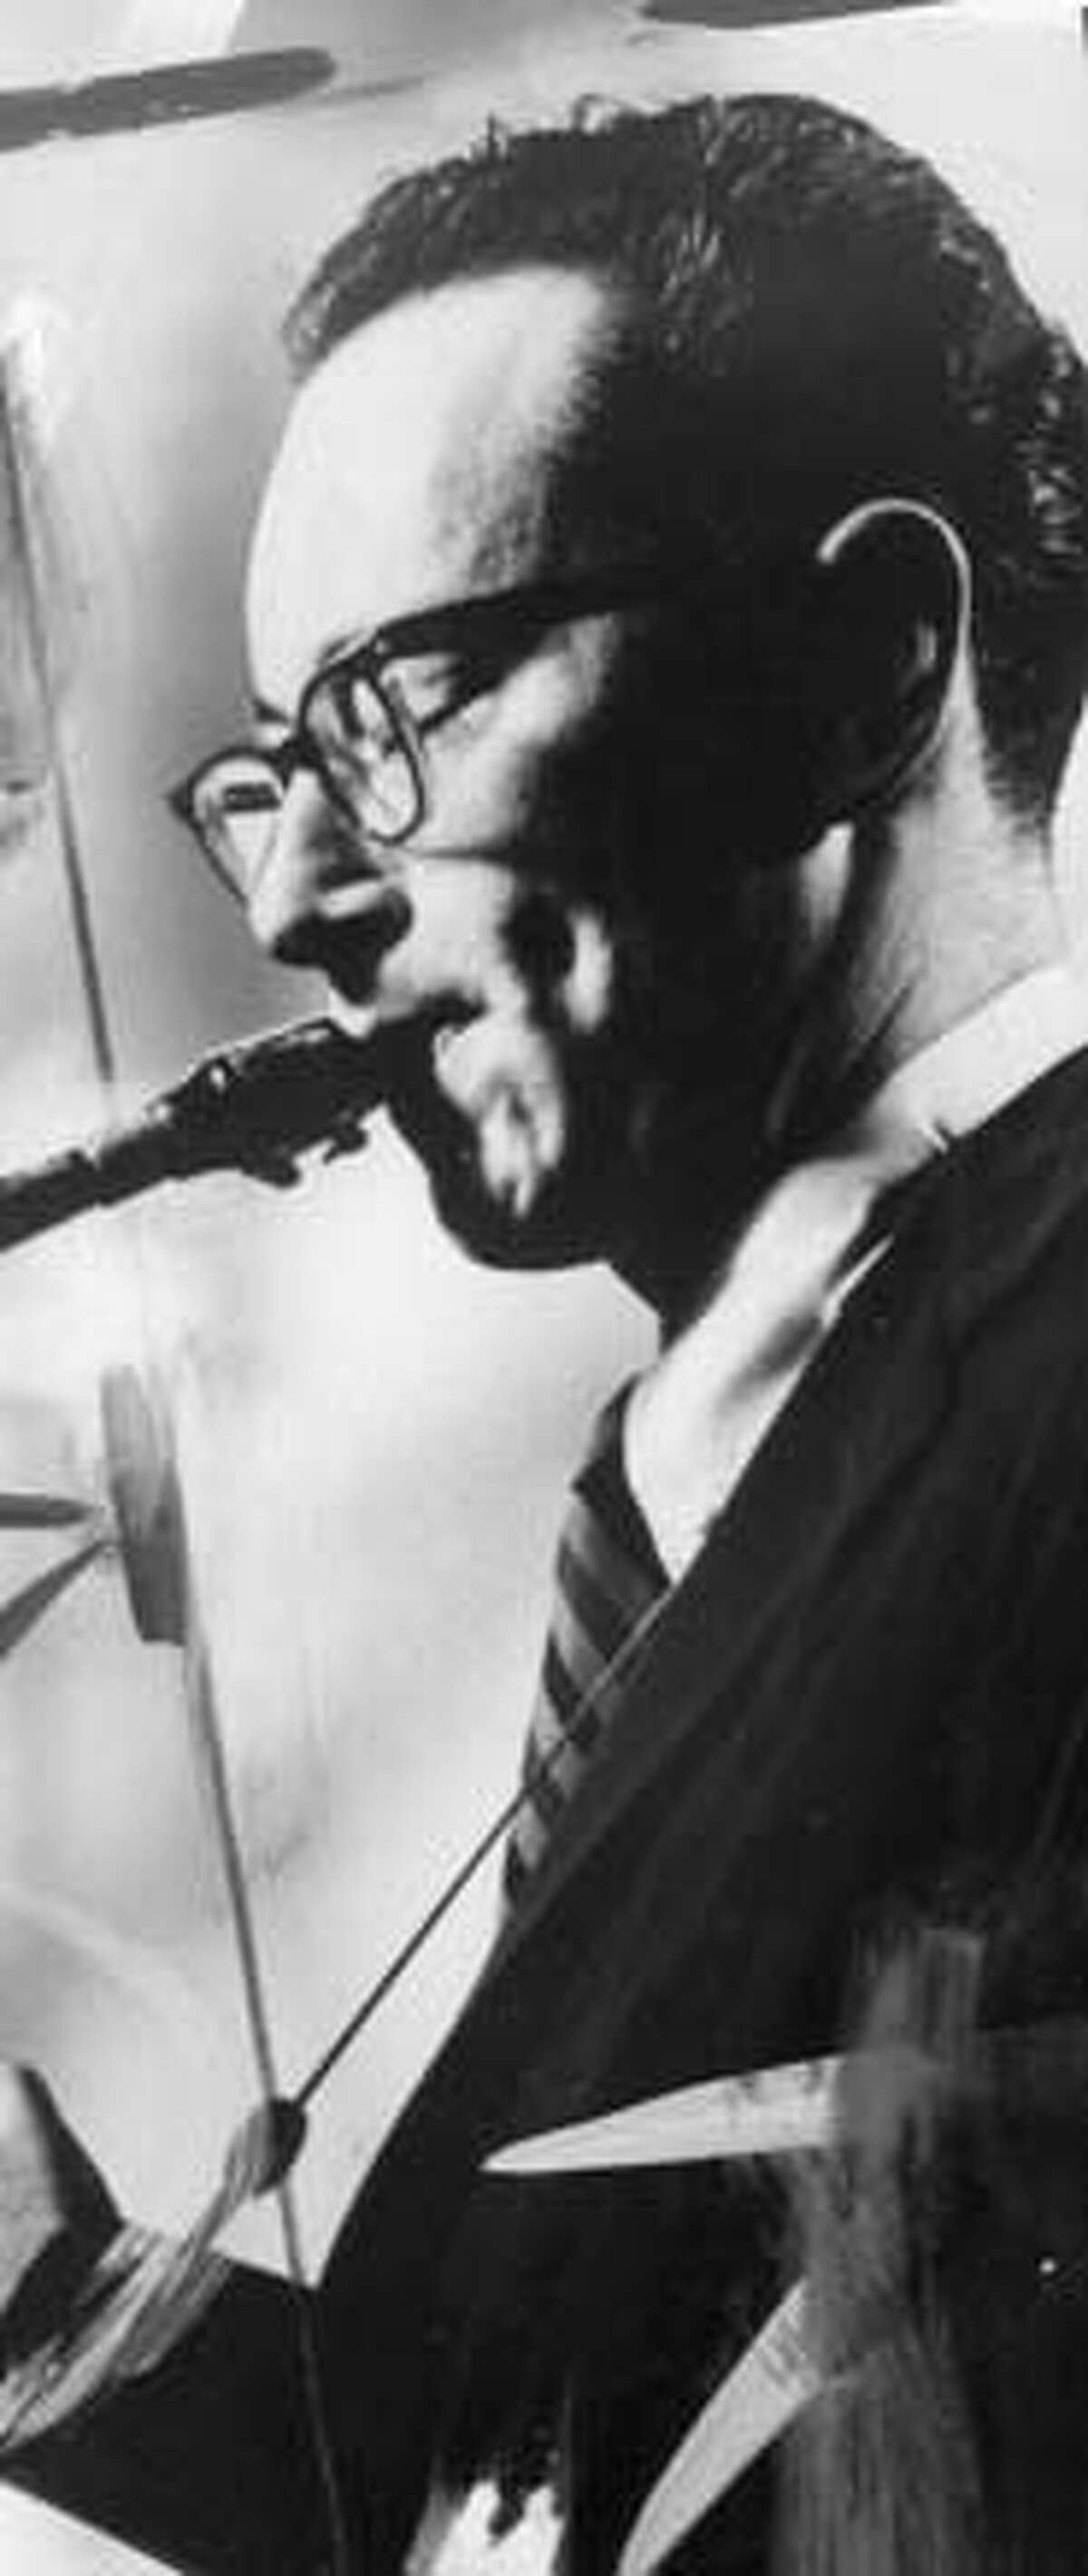 Jazz saxophonist Paul Desmond, photograph from 1964